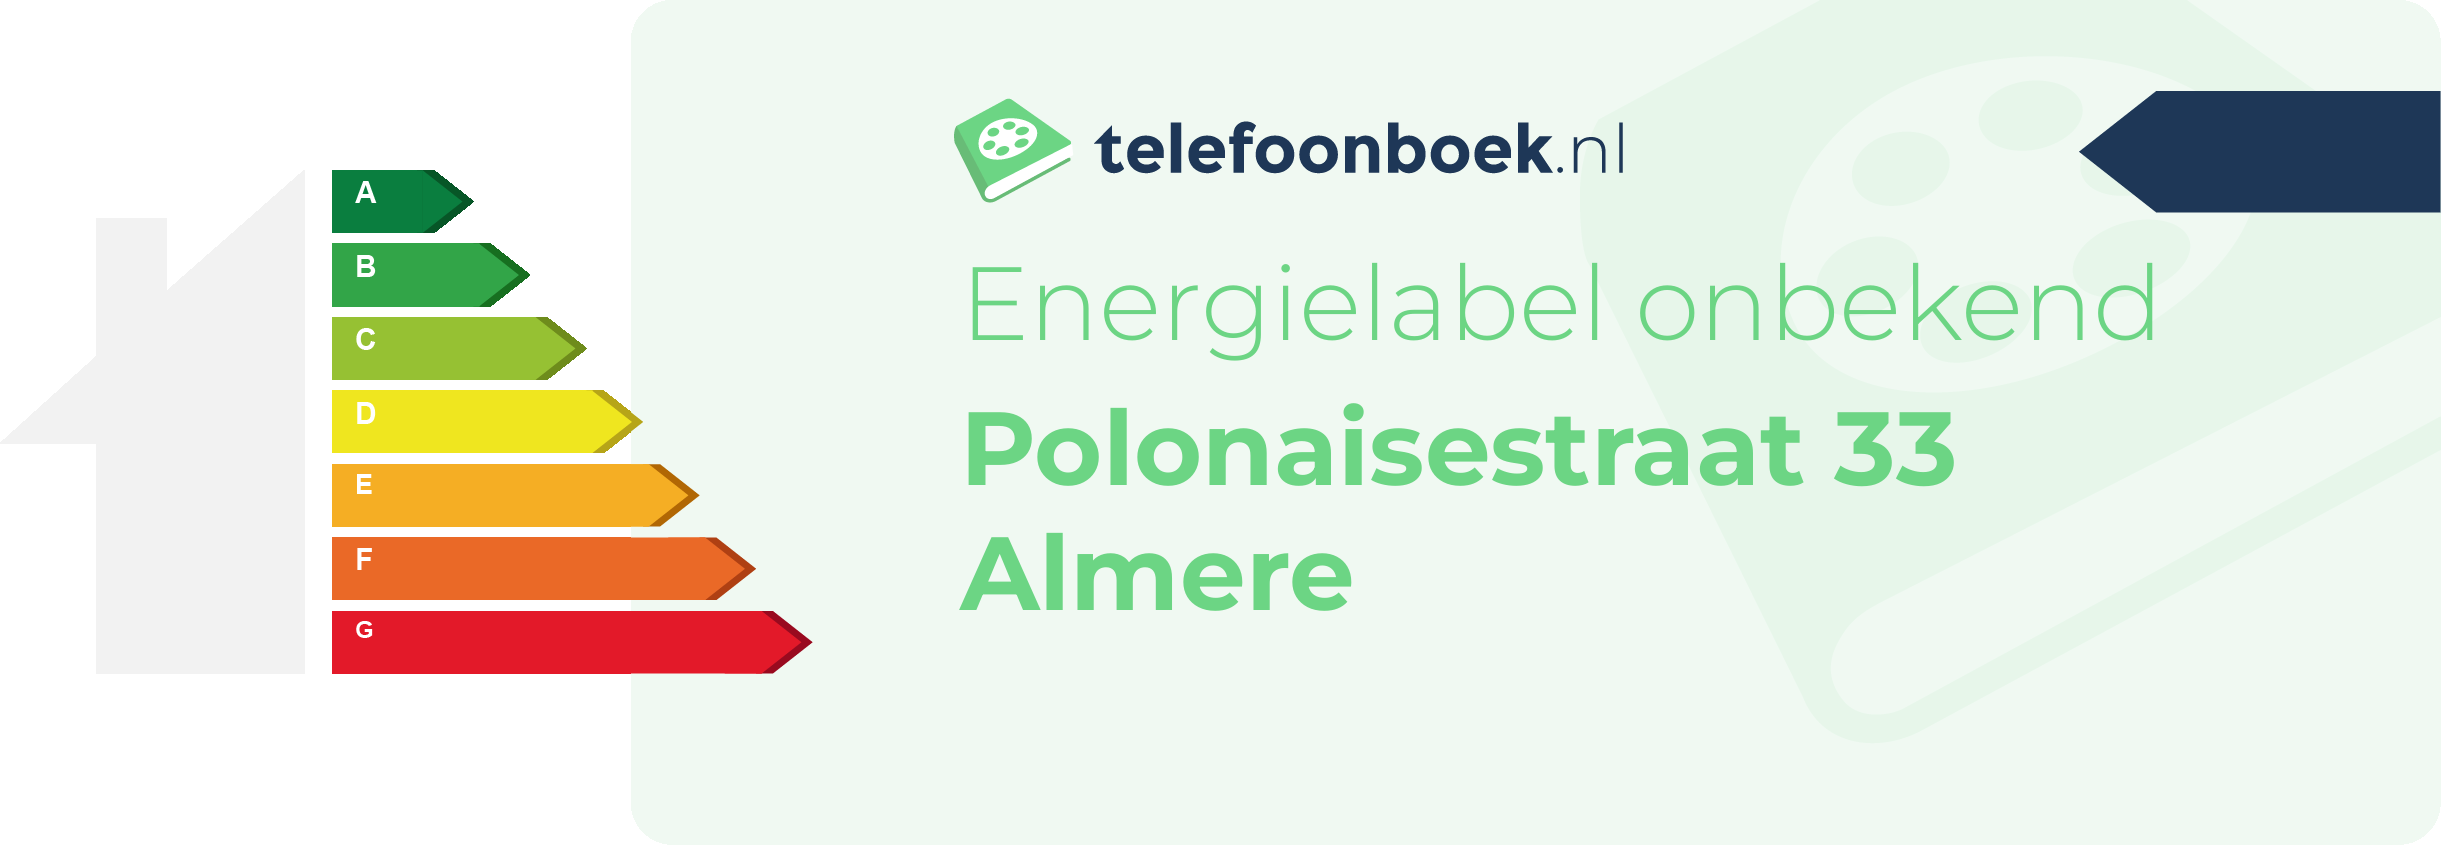 Energielabel Polonaisestraat 33 Almere